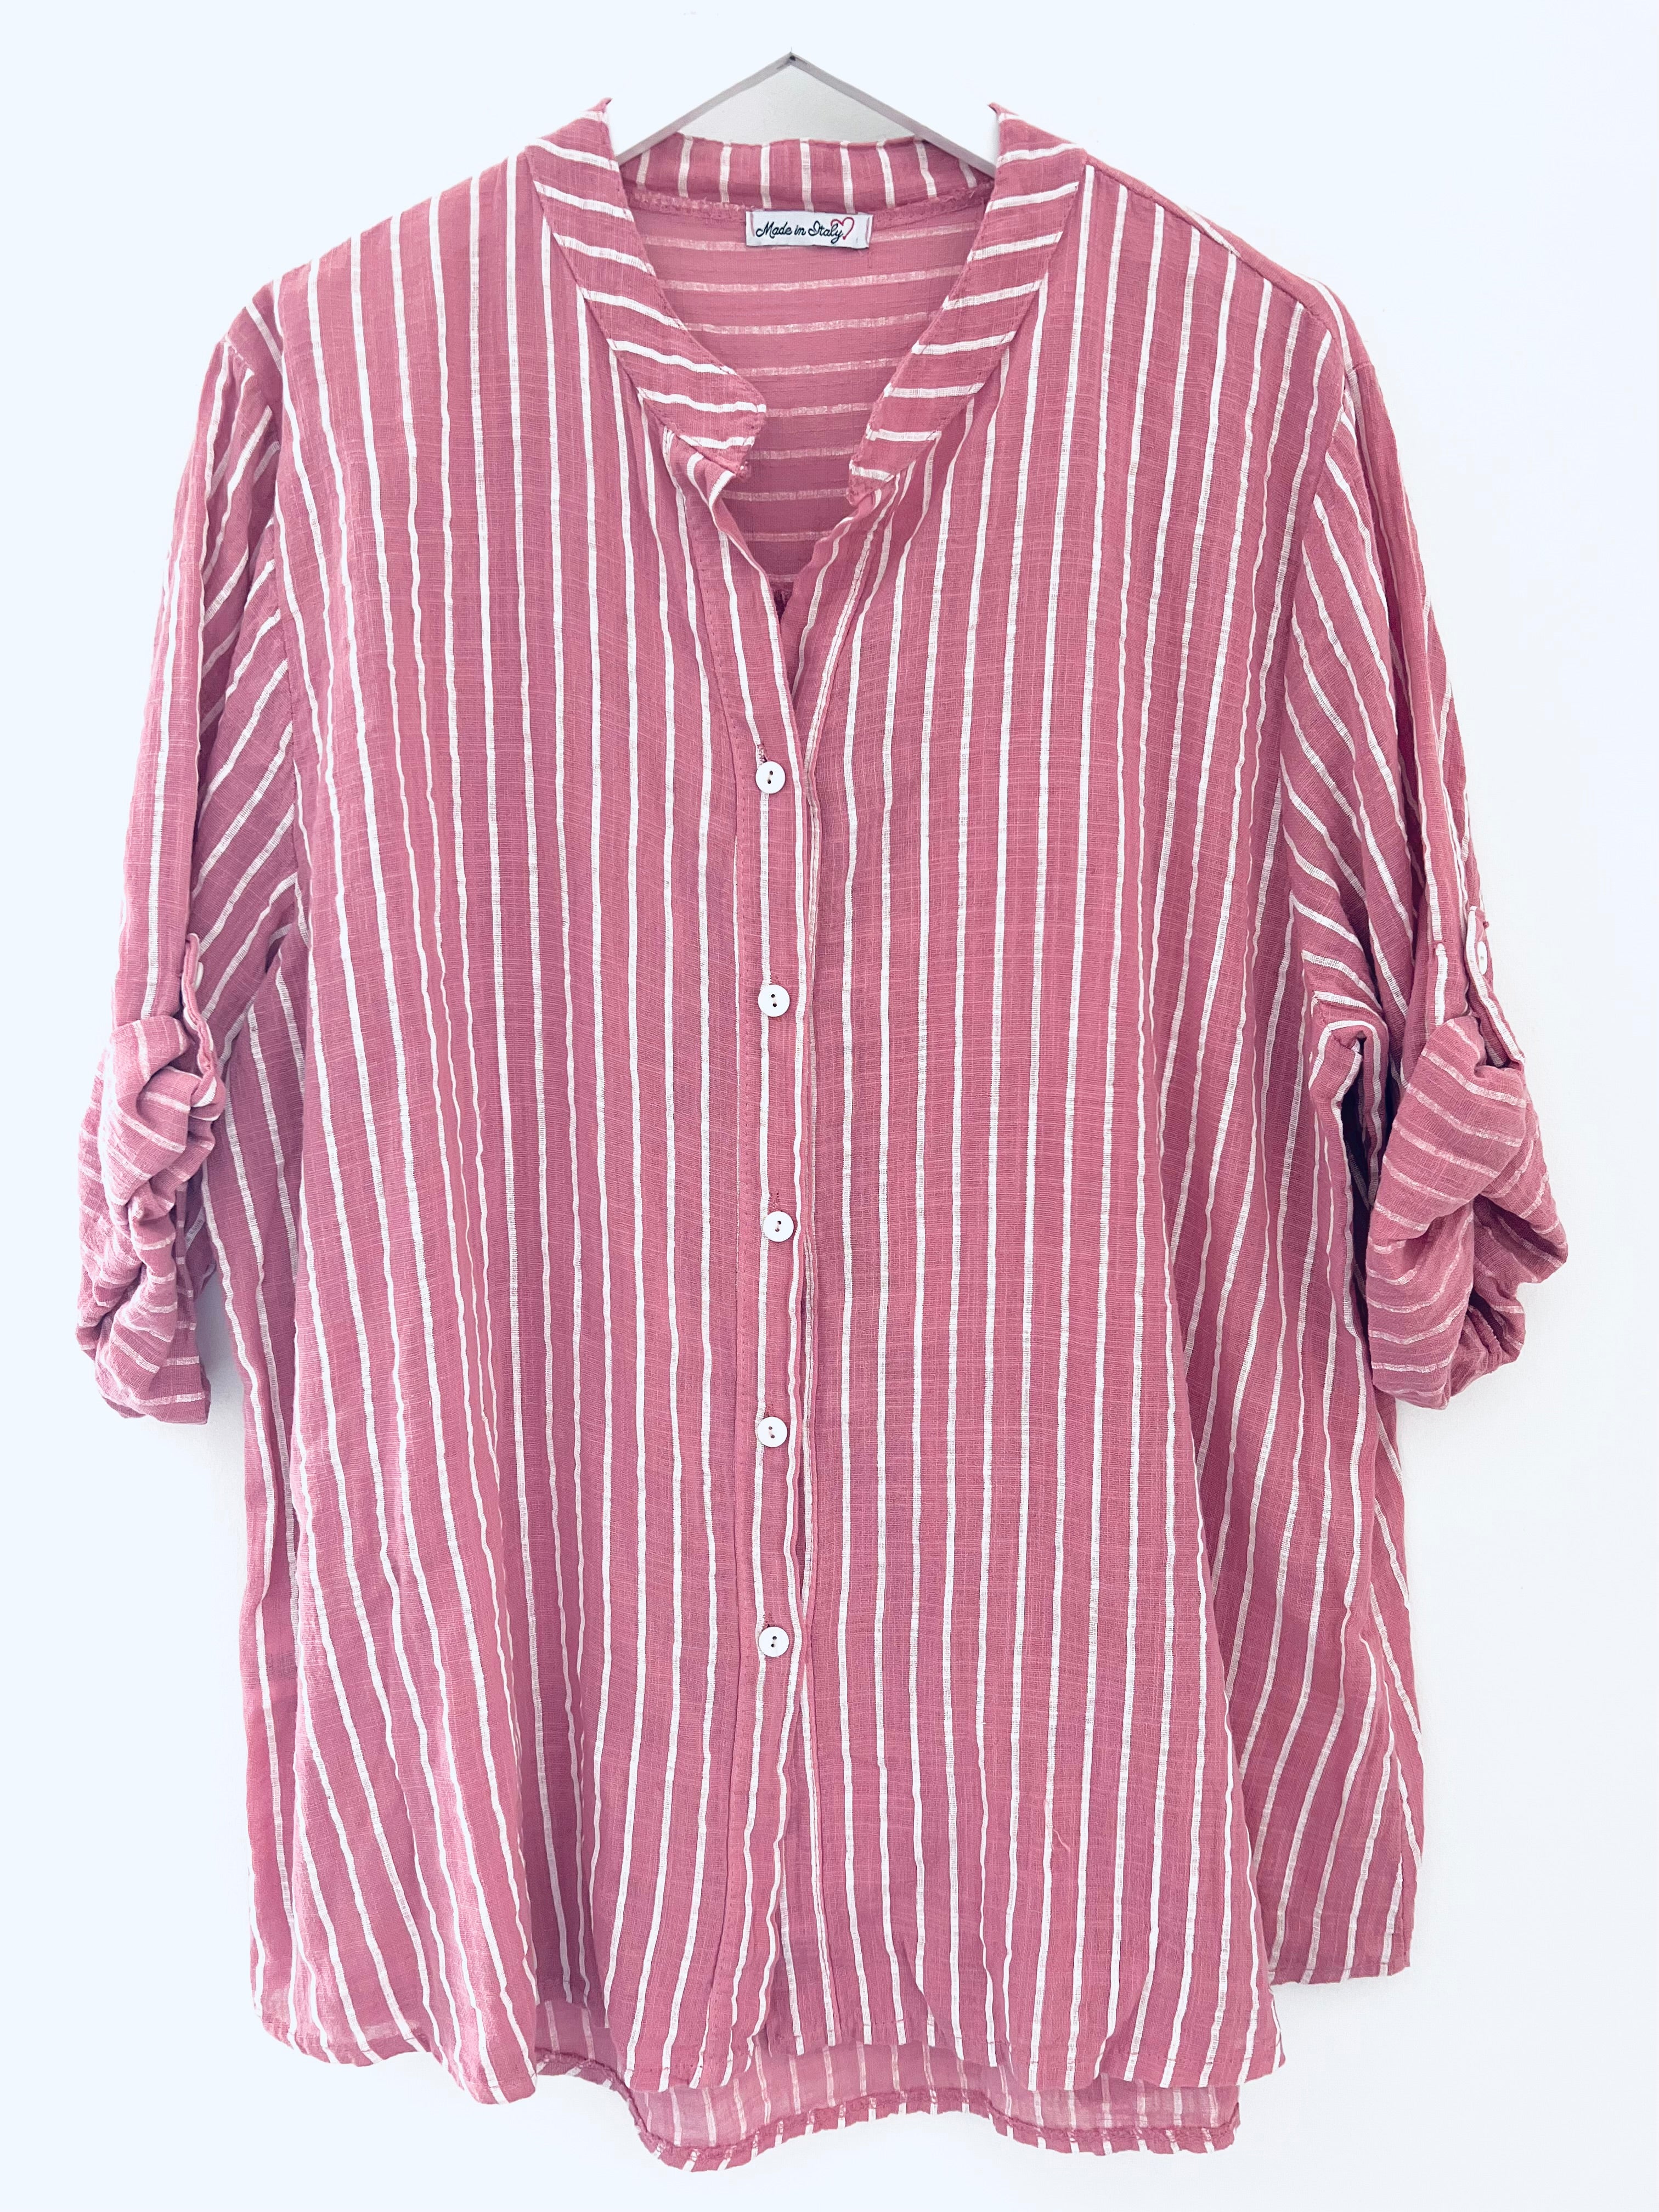 Stripe Shirt in Deep Pink & White